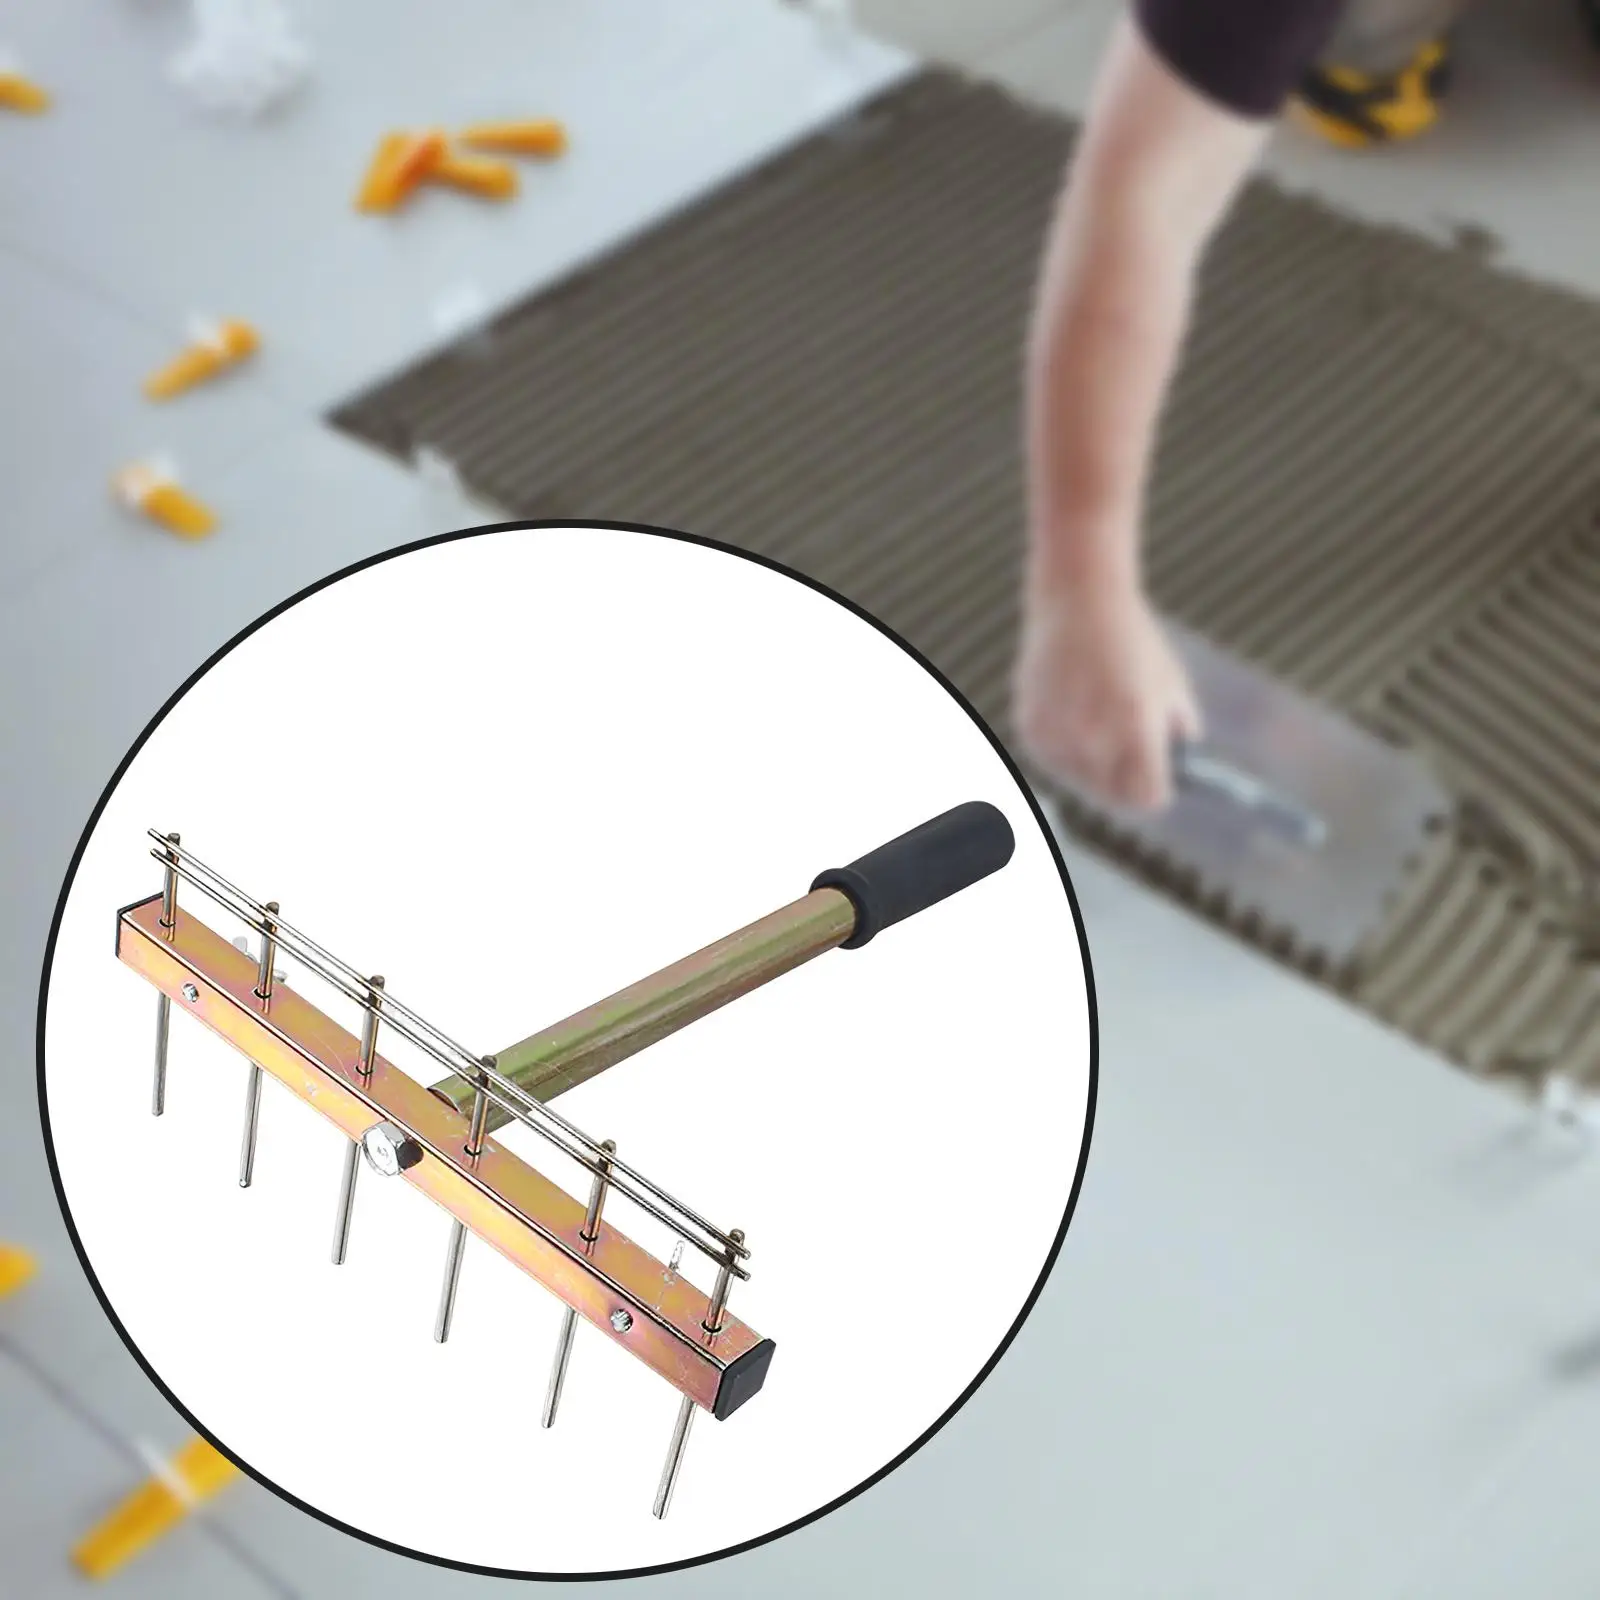 Floor Paving Tile Builder Tool Practical Multifunctional Loosening Mortar Tines Paving Tiles Device Tiles Laying Leveling System